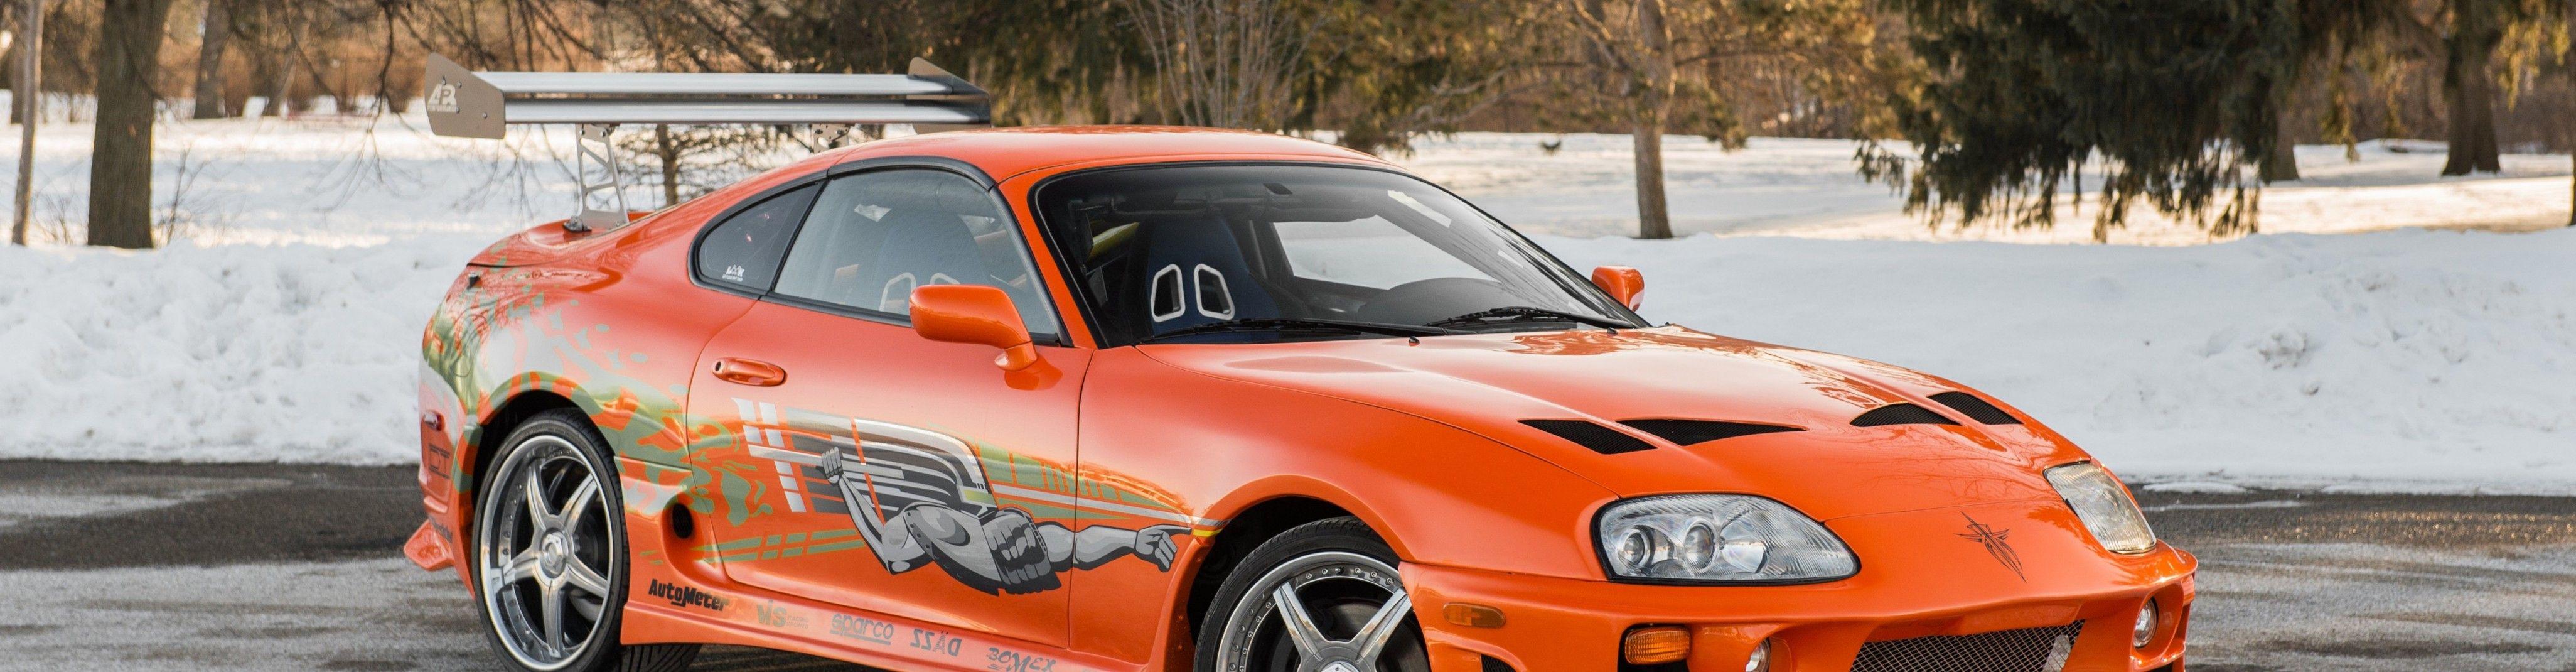 Download 4104x1070 Toyota Supra, Orange, Racing, Cars, The Fast